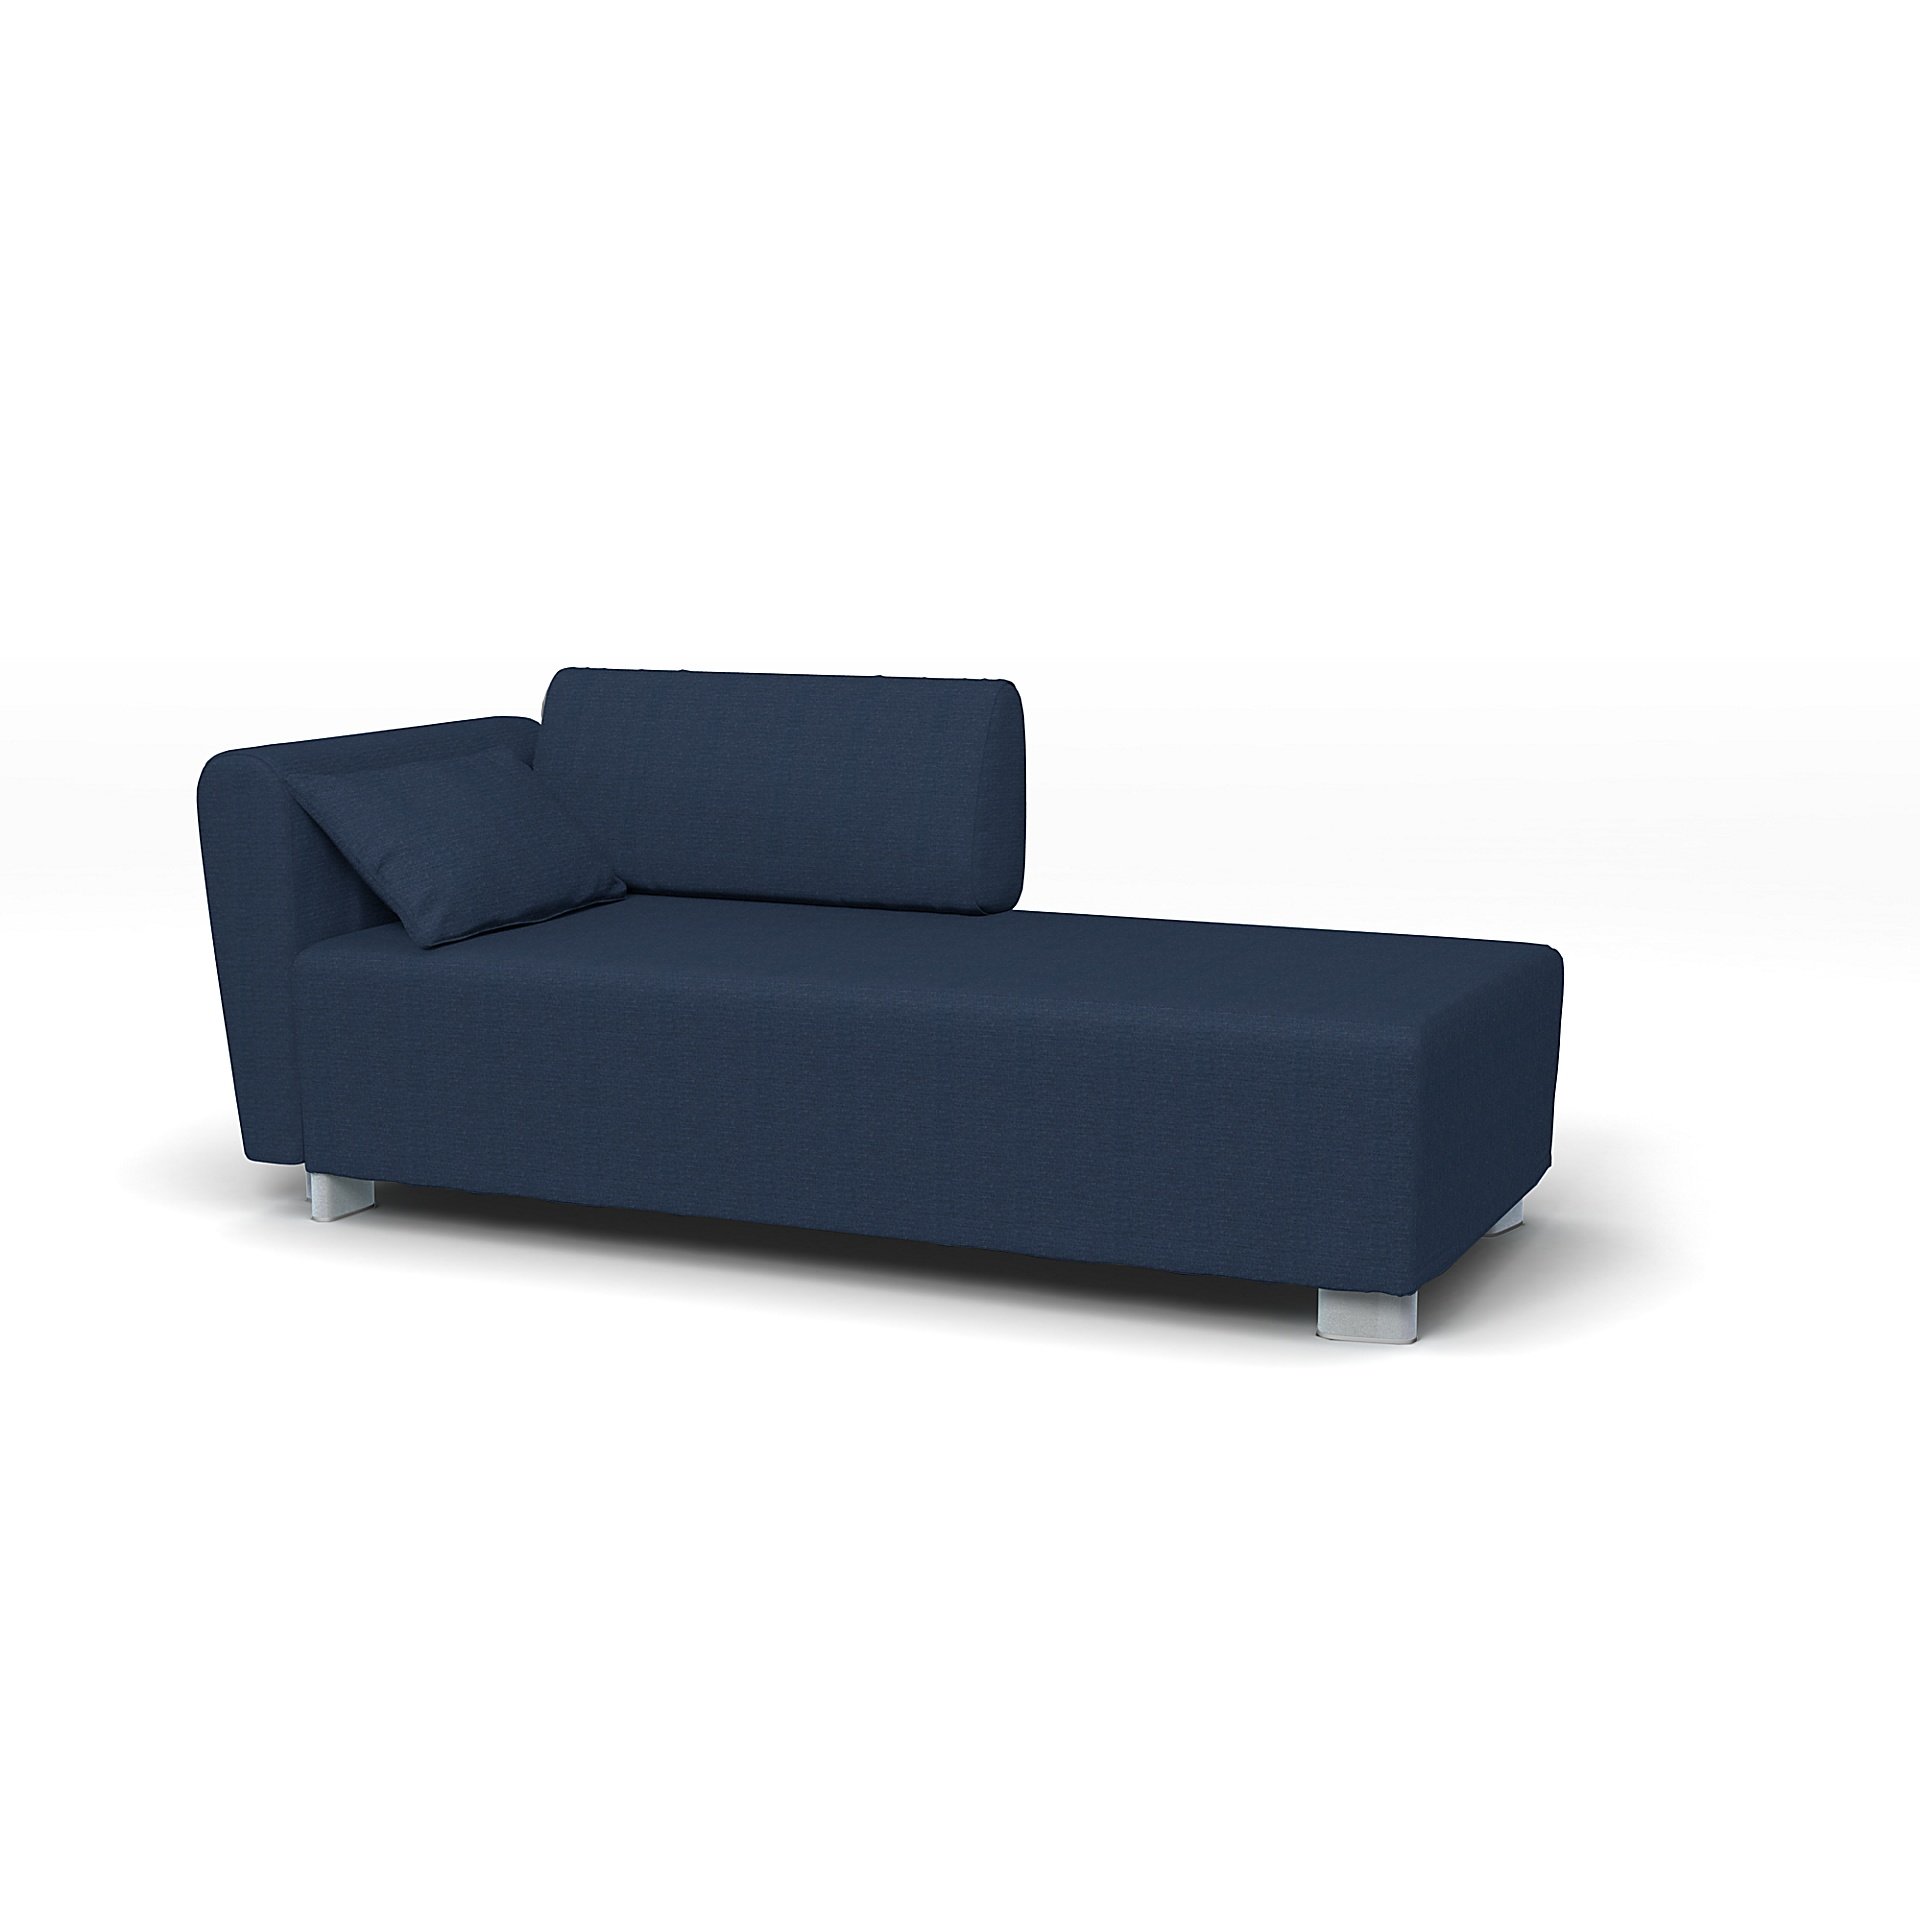 IKEA - Mysinge Chaise Longue with Armrest Cover, Navy Blue, Linen - Bemz